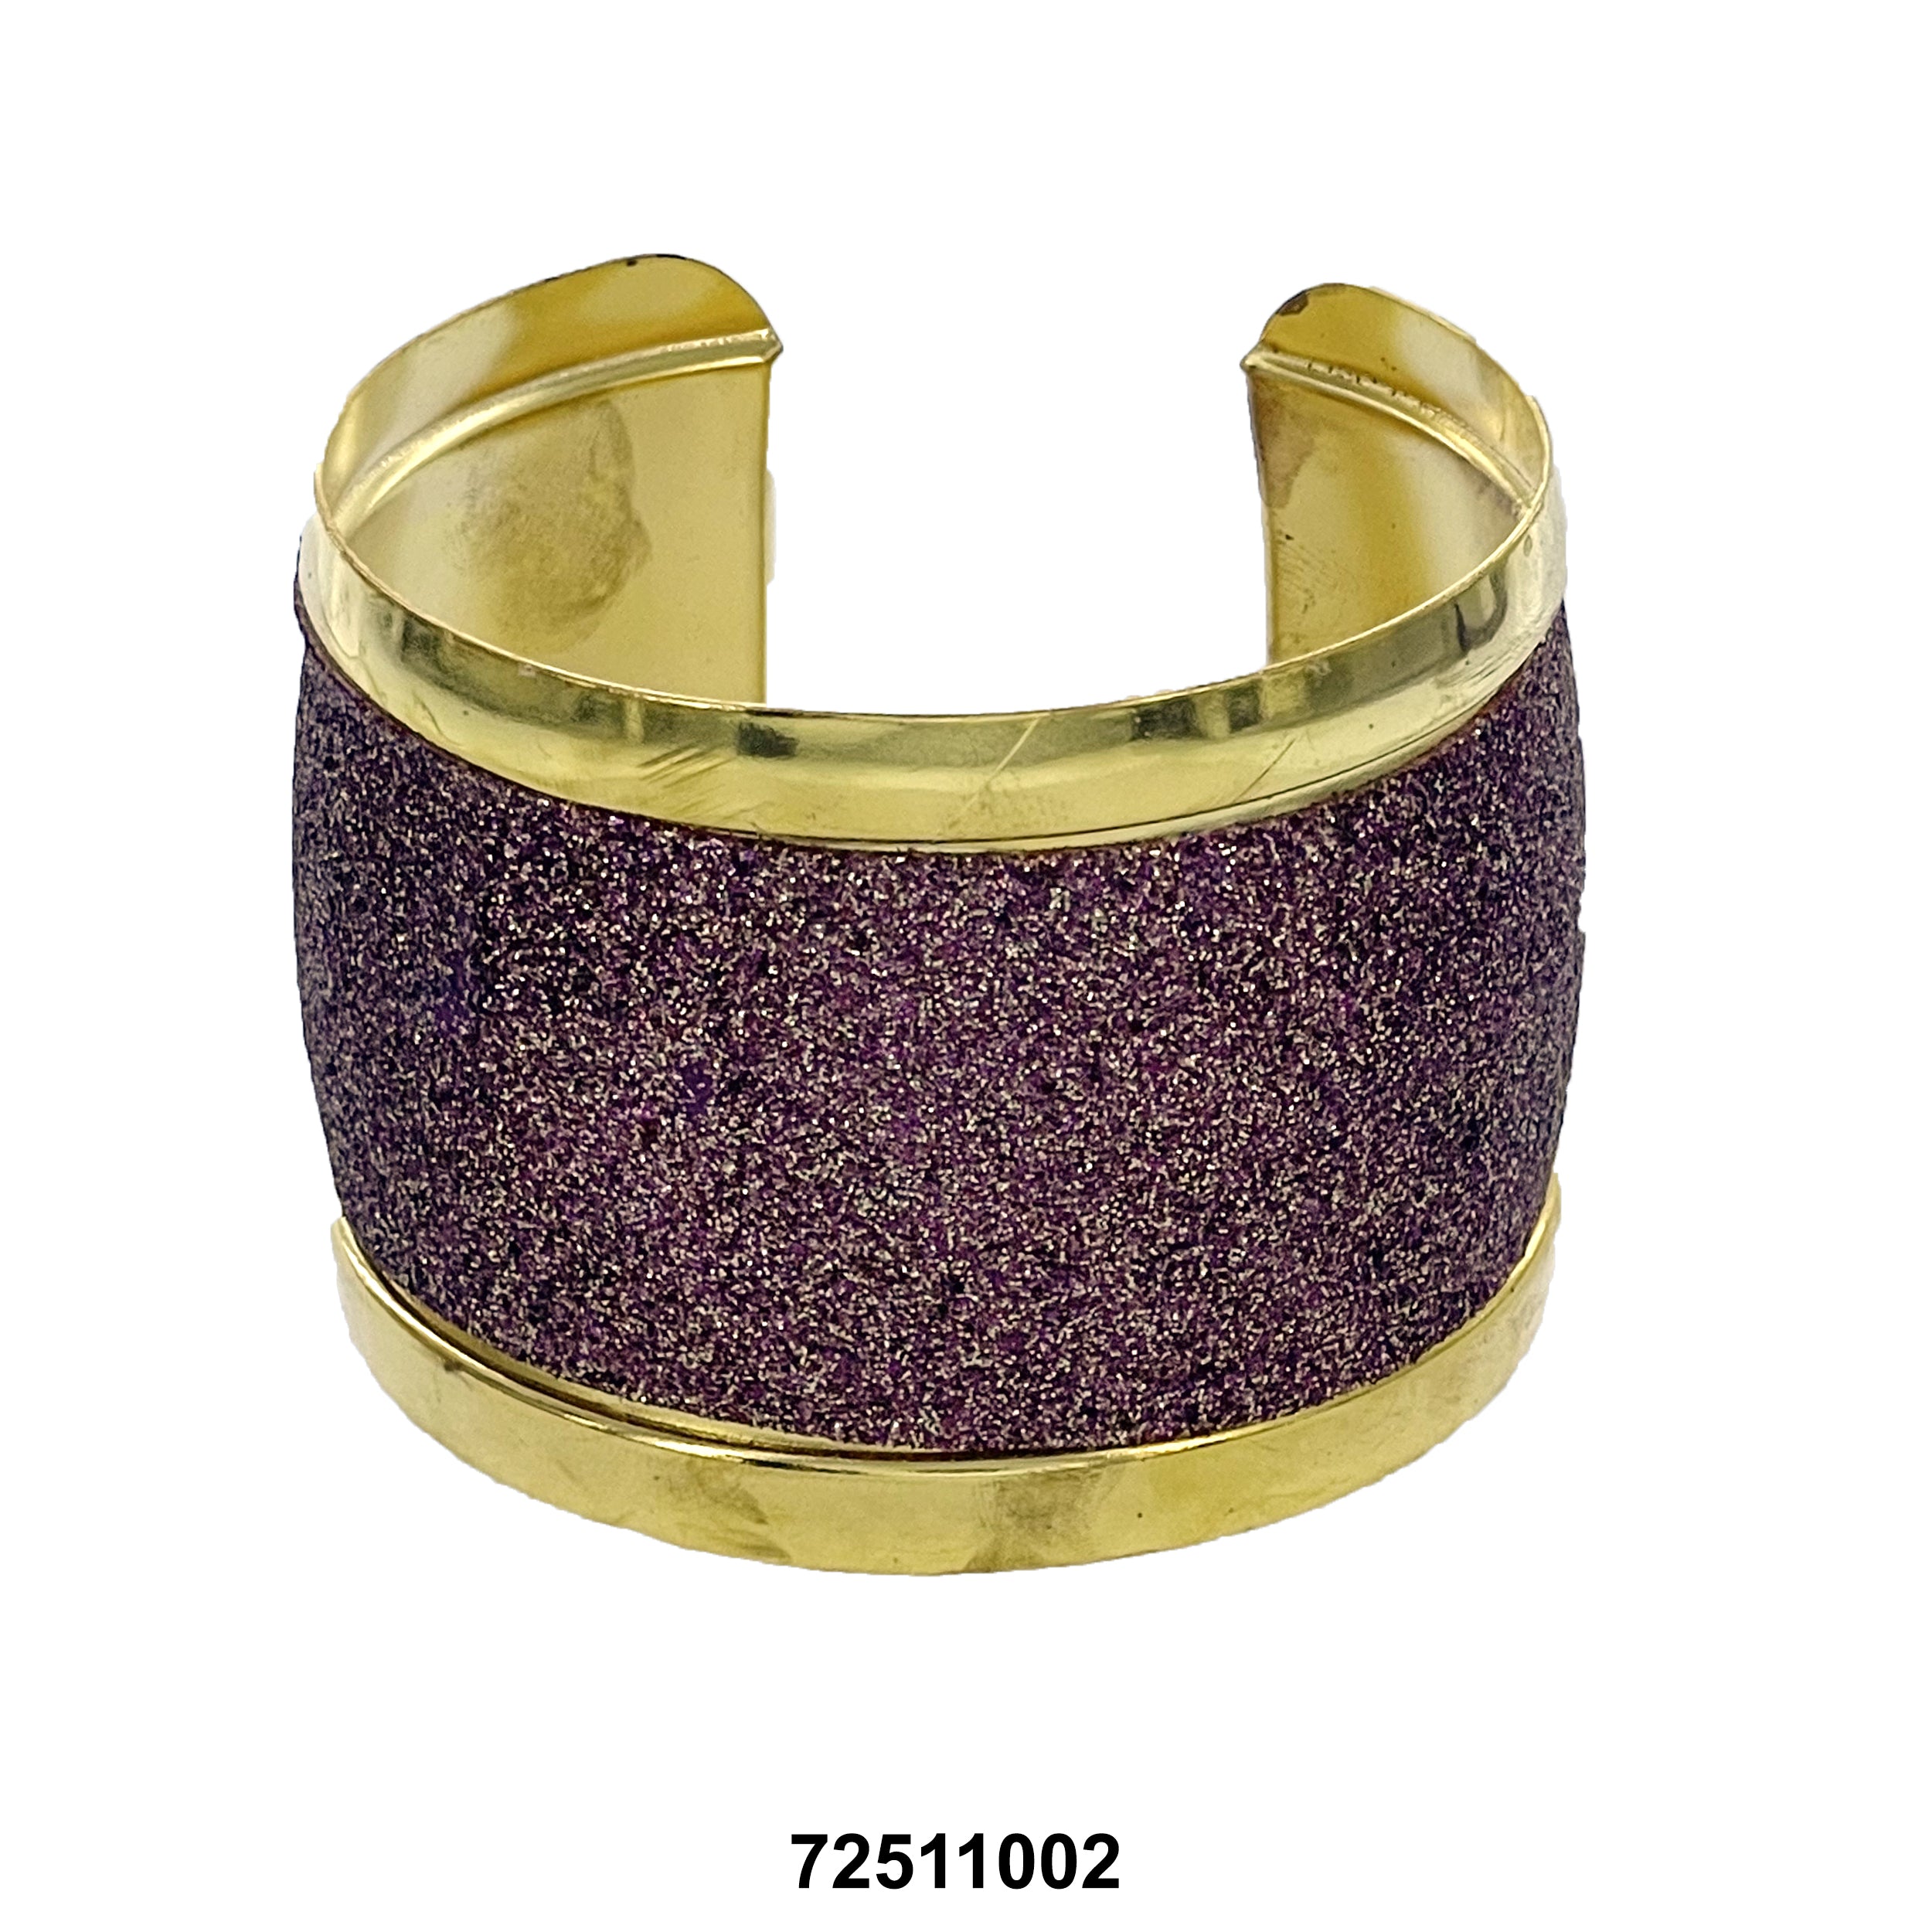 Cuff Bangle Bracelet 72511002